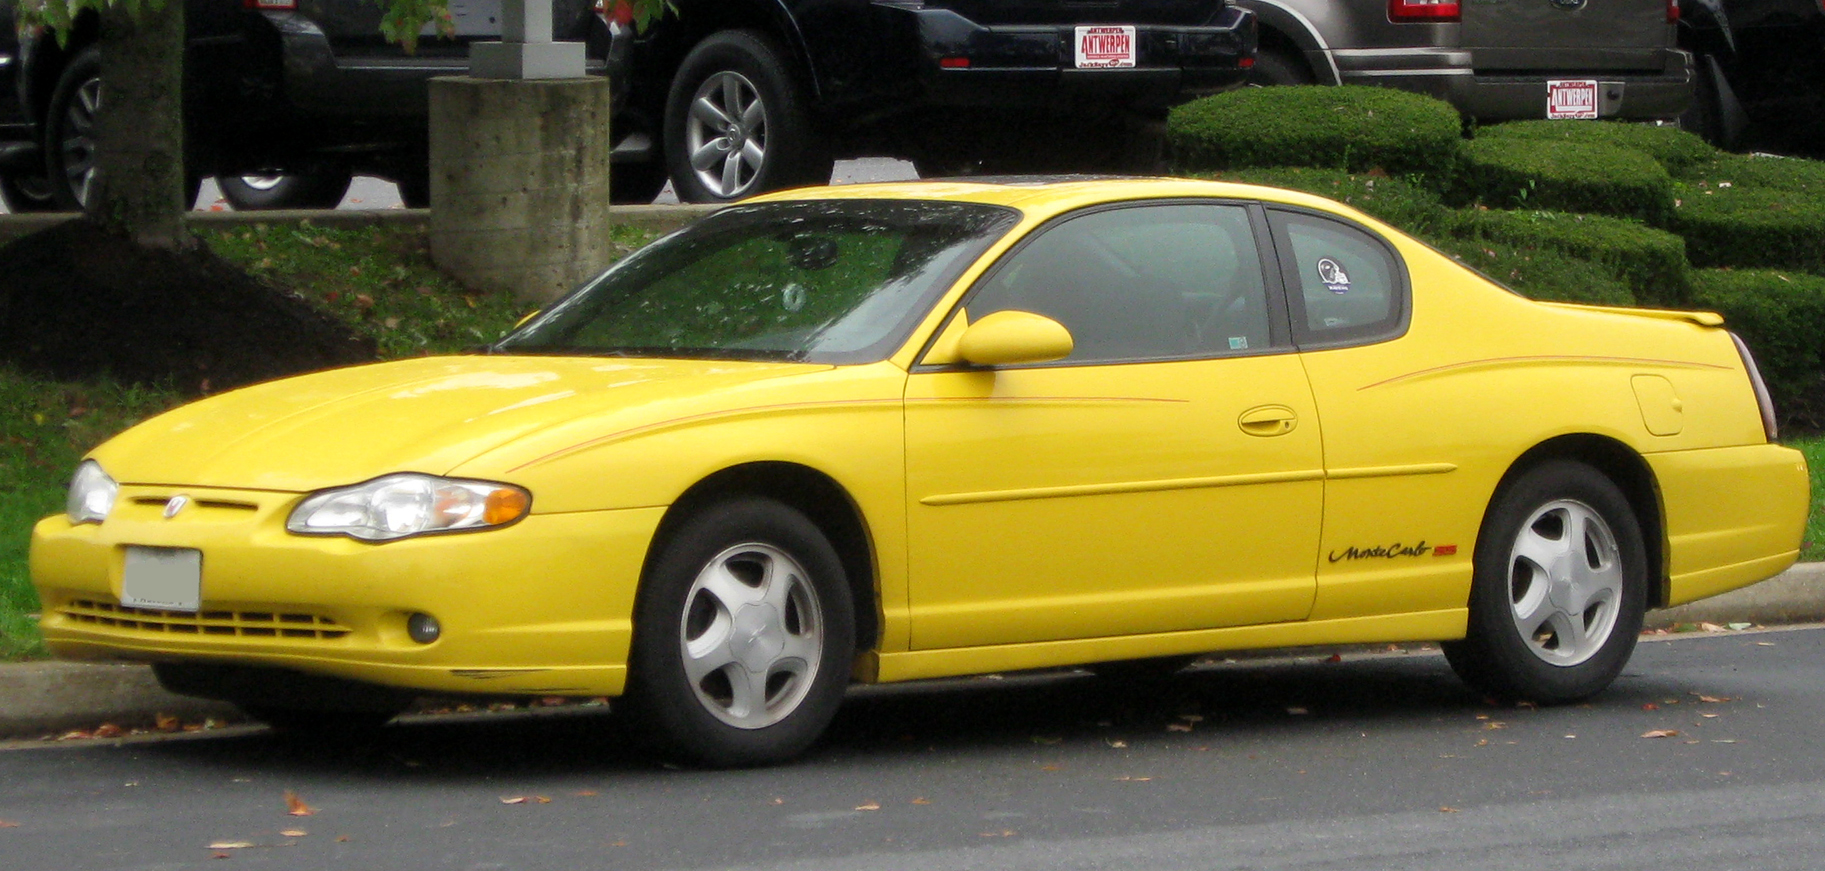 File:2000-2005 Chevrolet Monte Carlo -- 10-19-2011.jpg - Wikimedia Commons